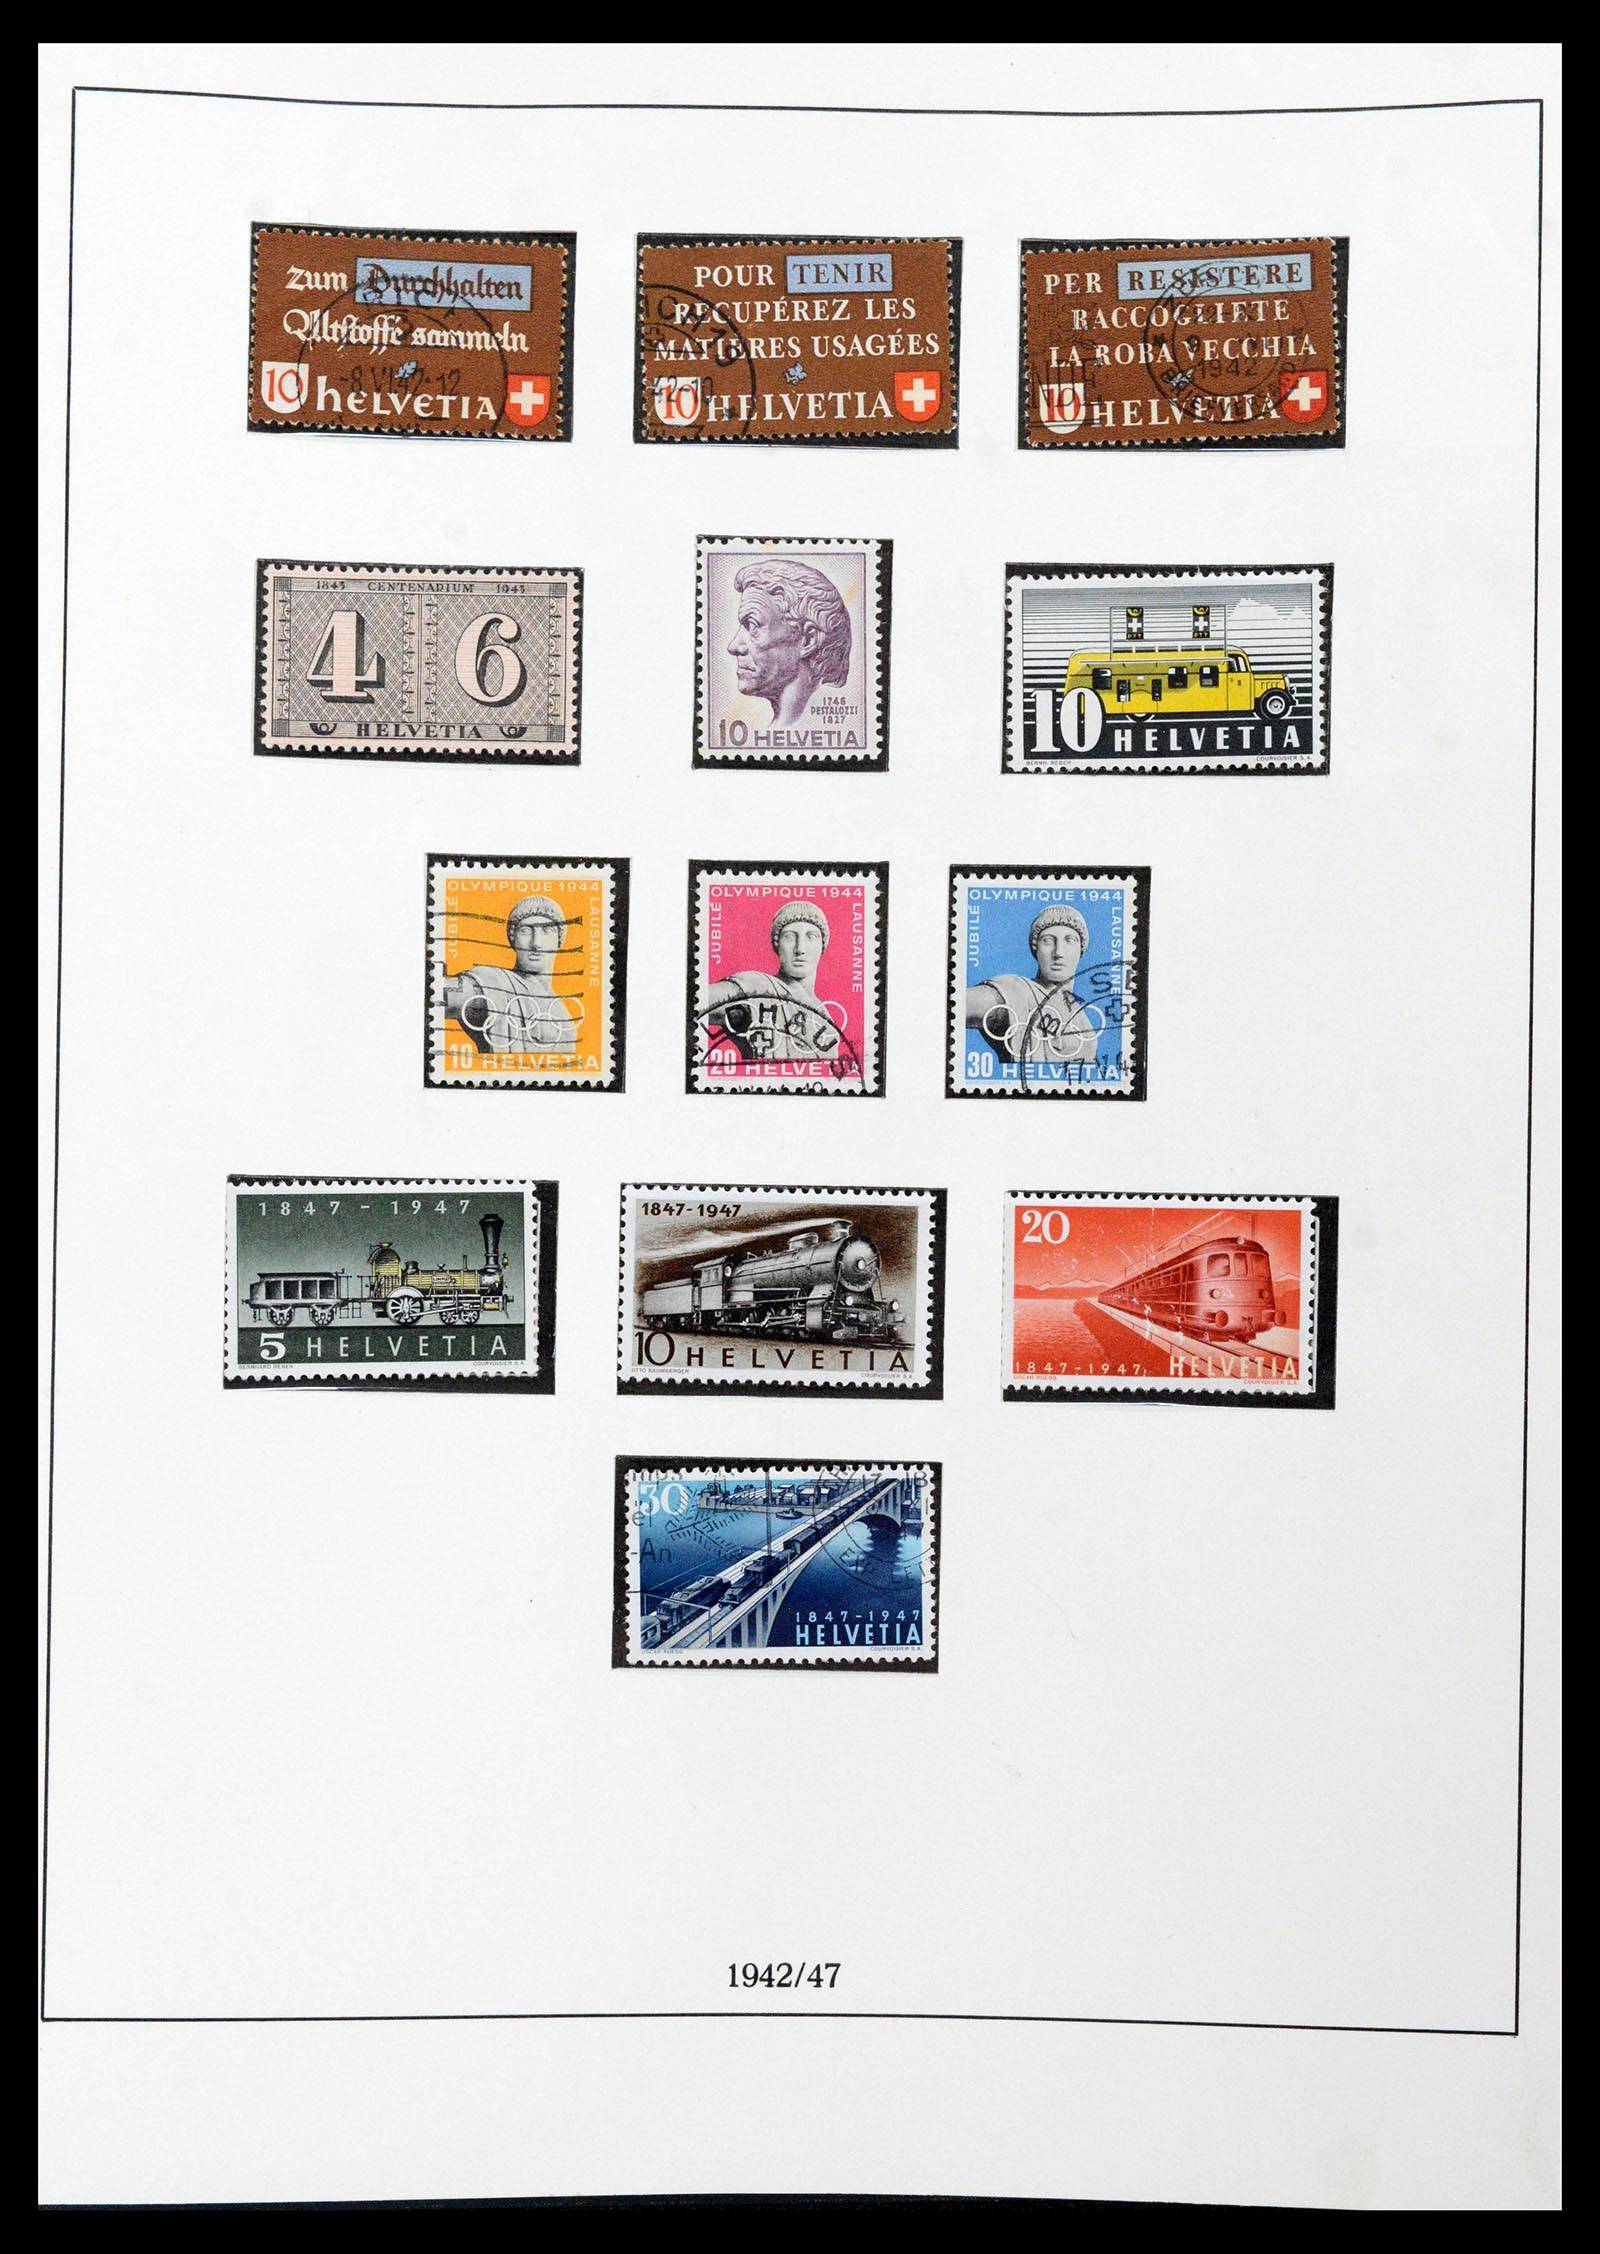 39235 0035 - Stamp collection 39235 Switzerland 1843-1960.